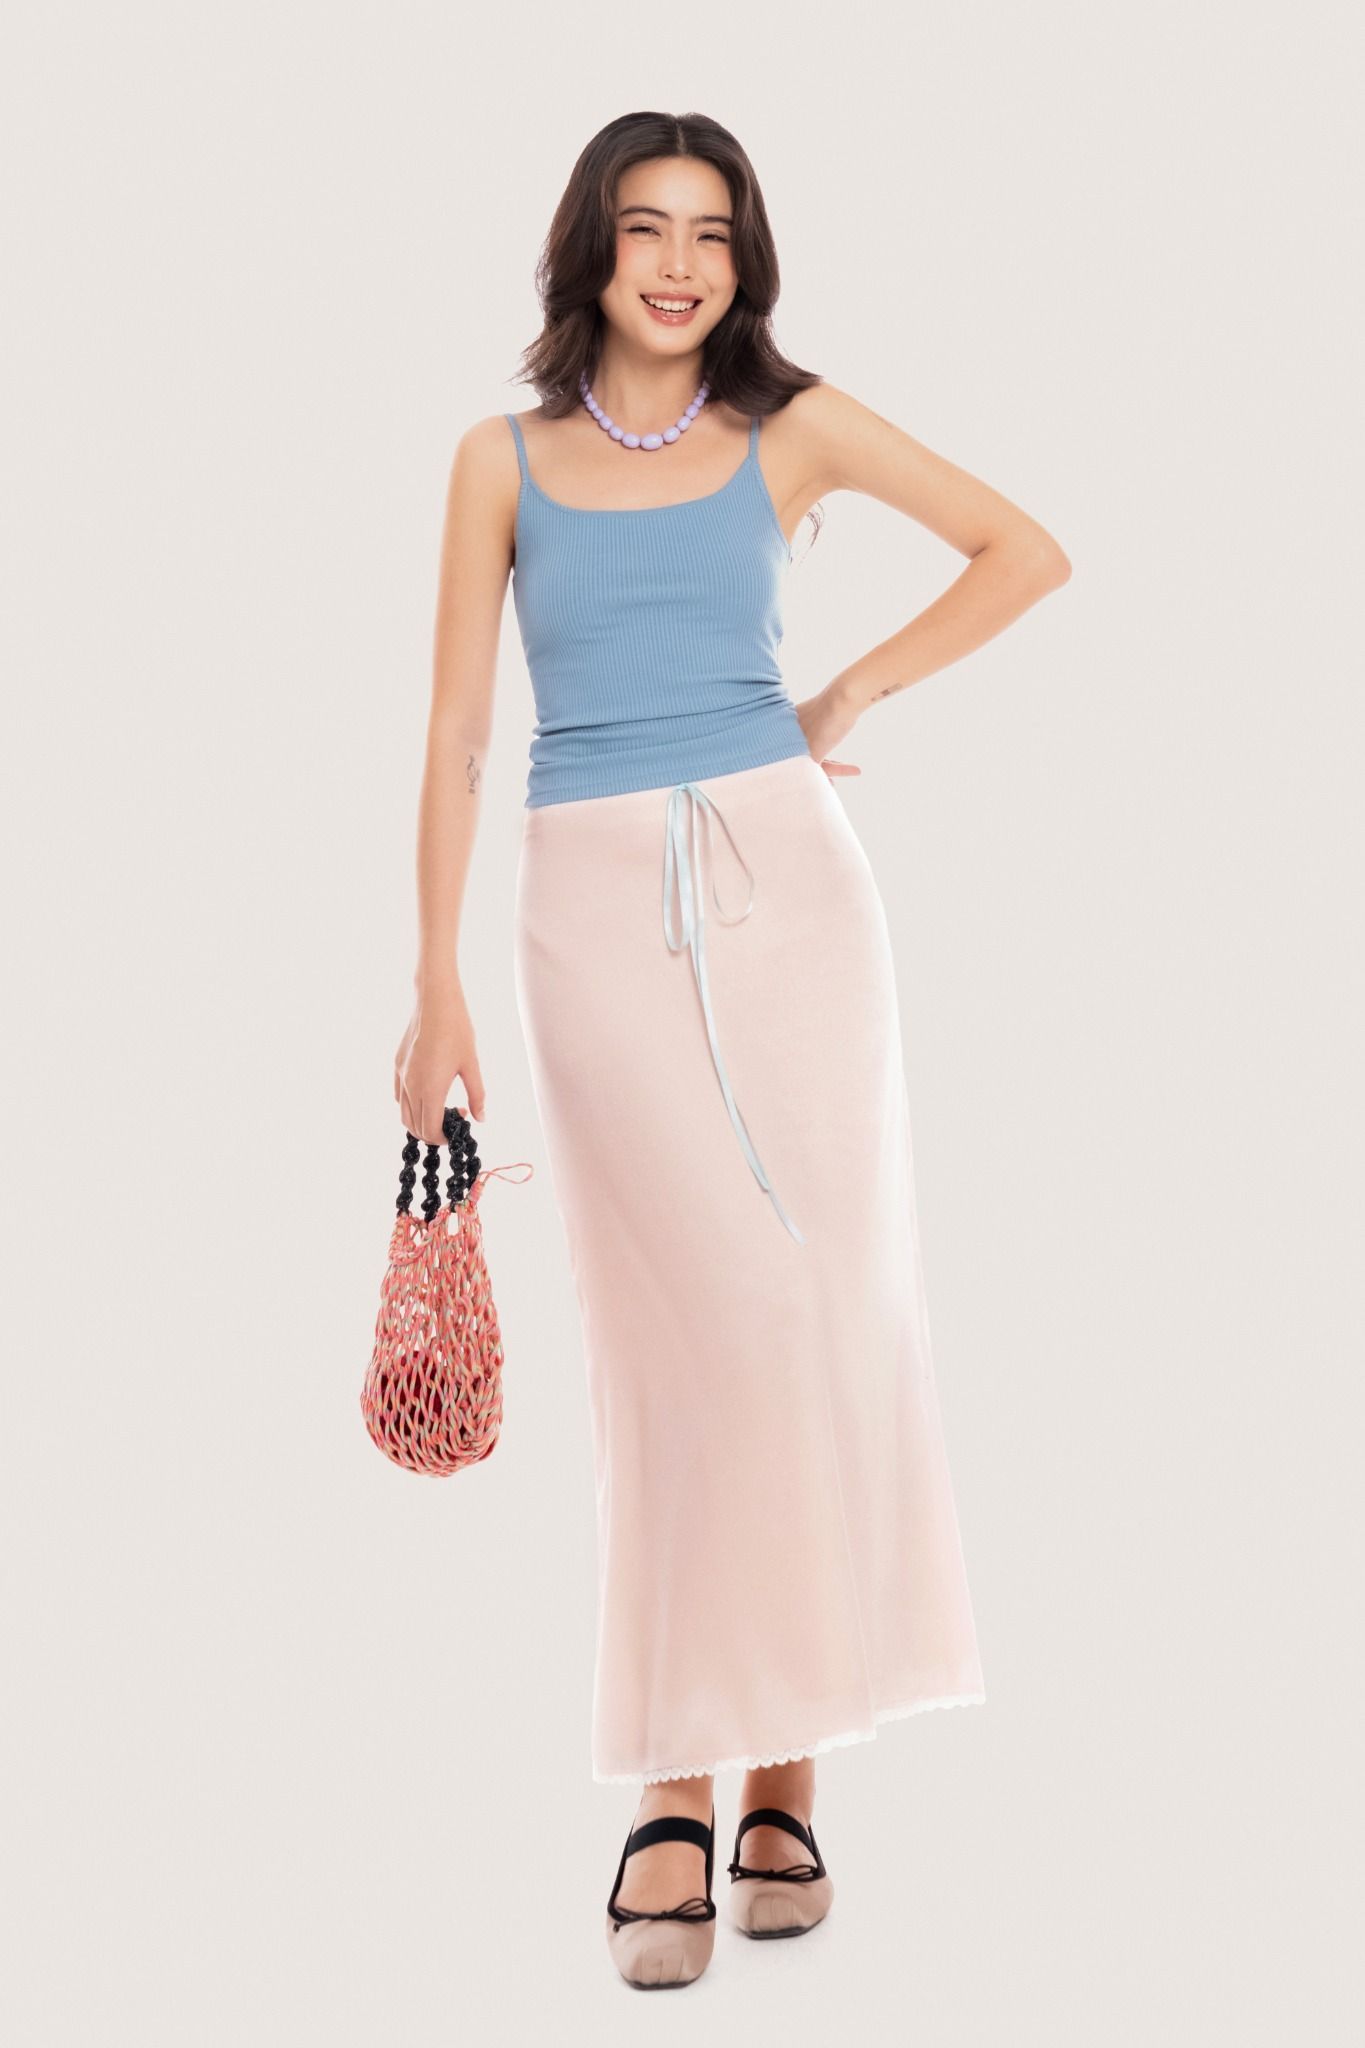  Bow Ribbon Pink Lace Trimming Silk Midi Skirt 